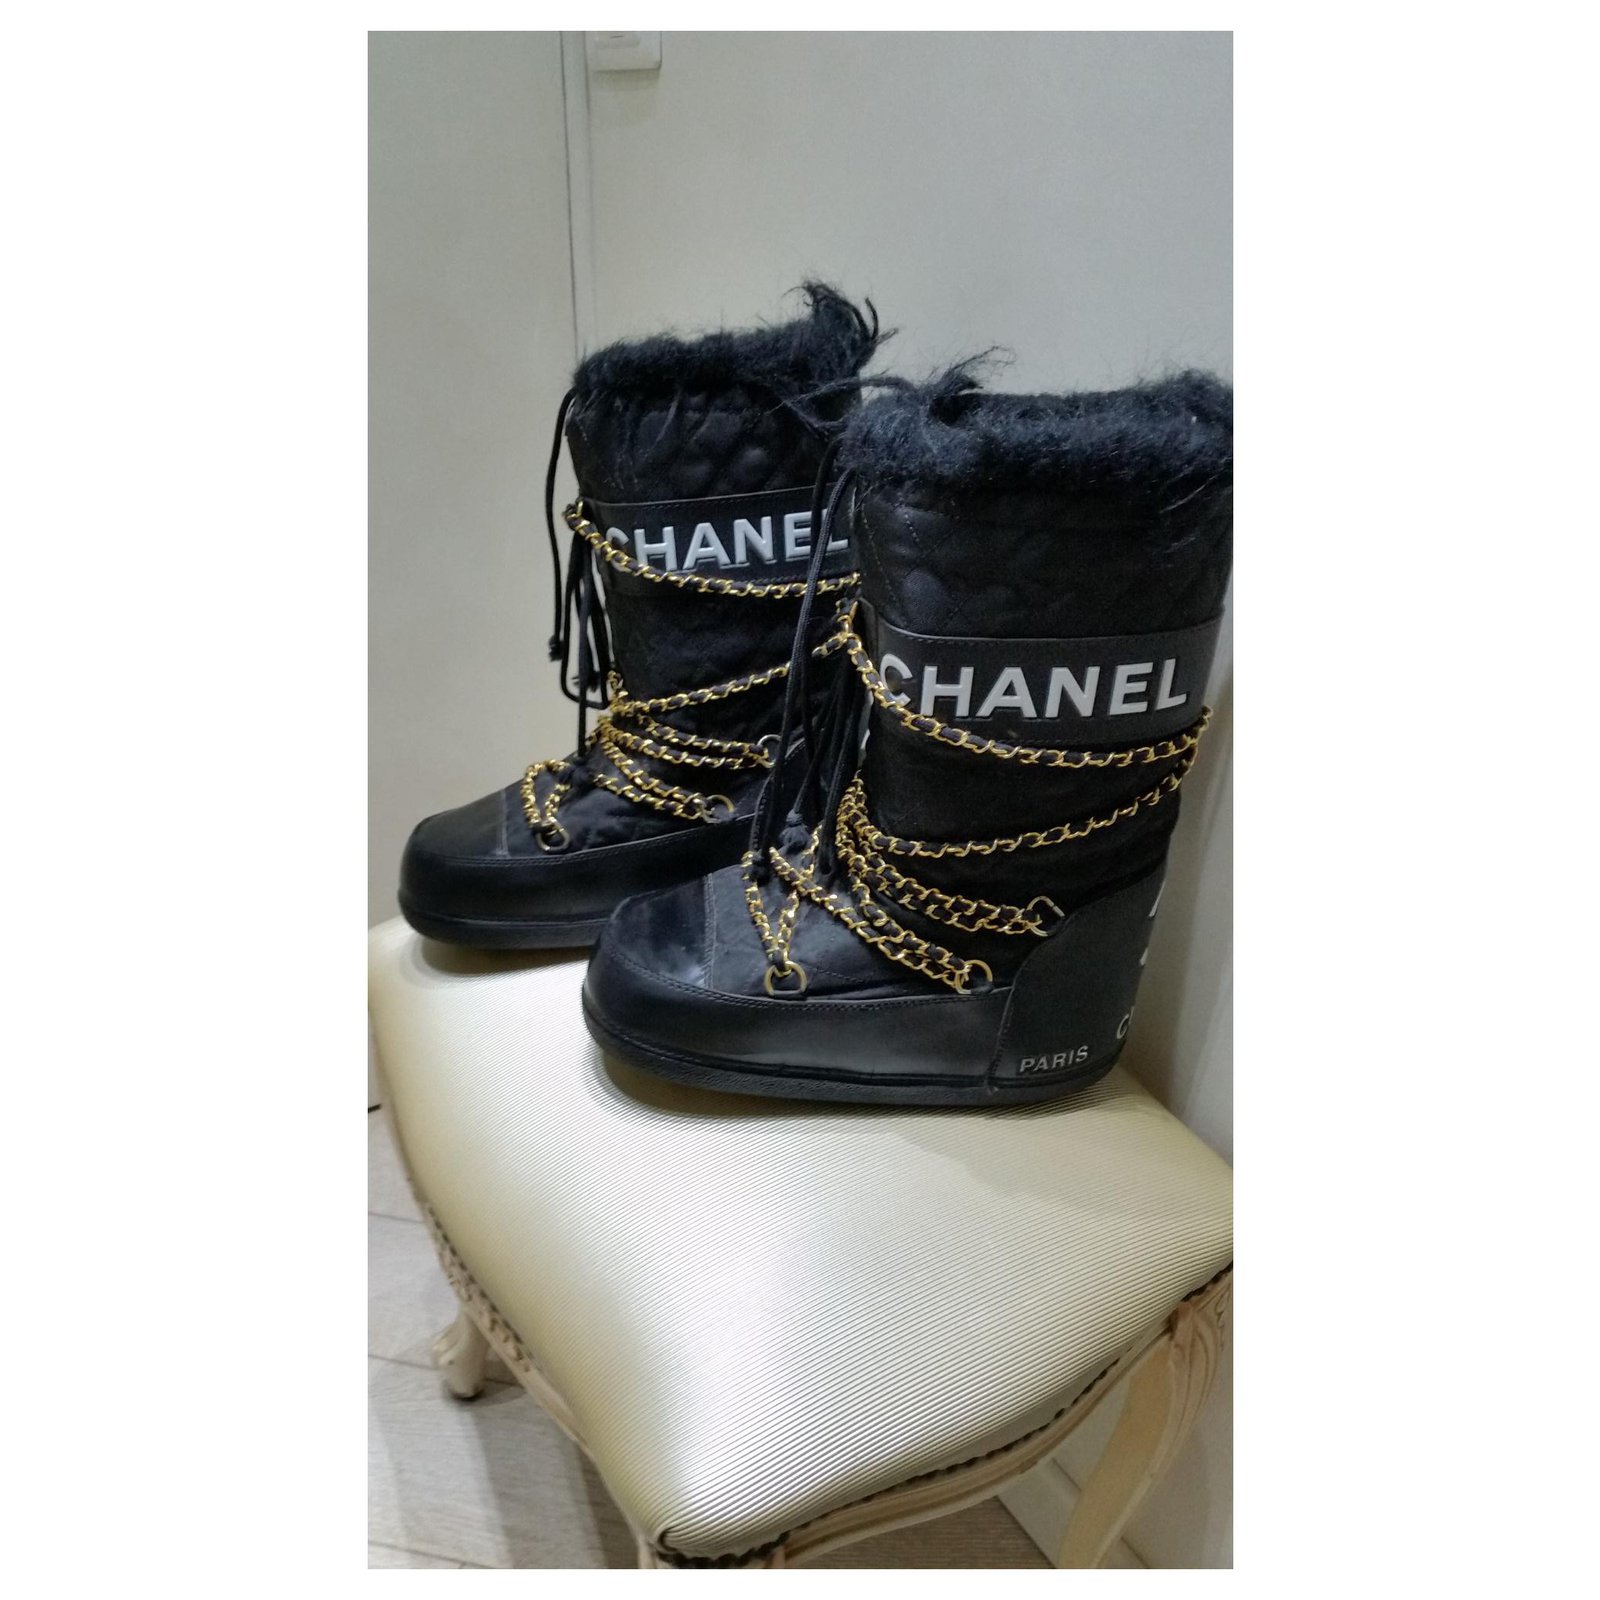 Chanel iconic black Moonboots